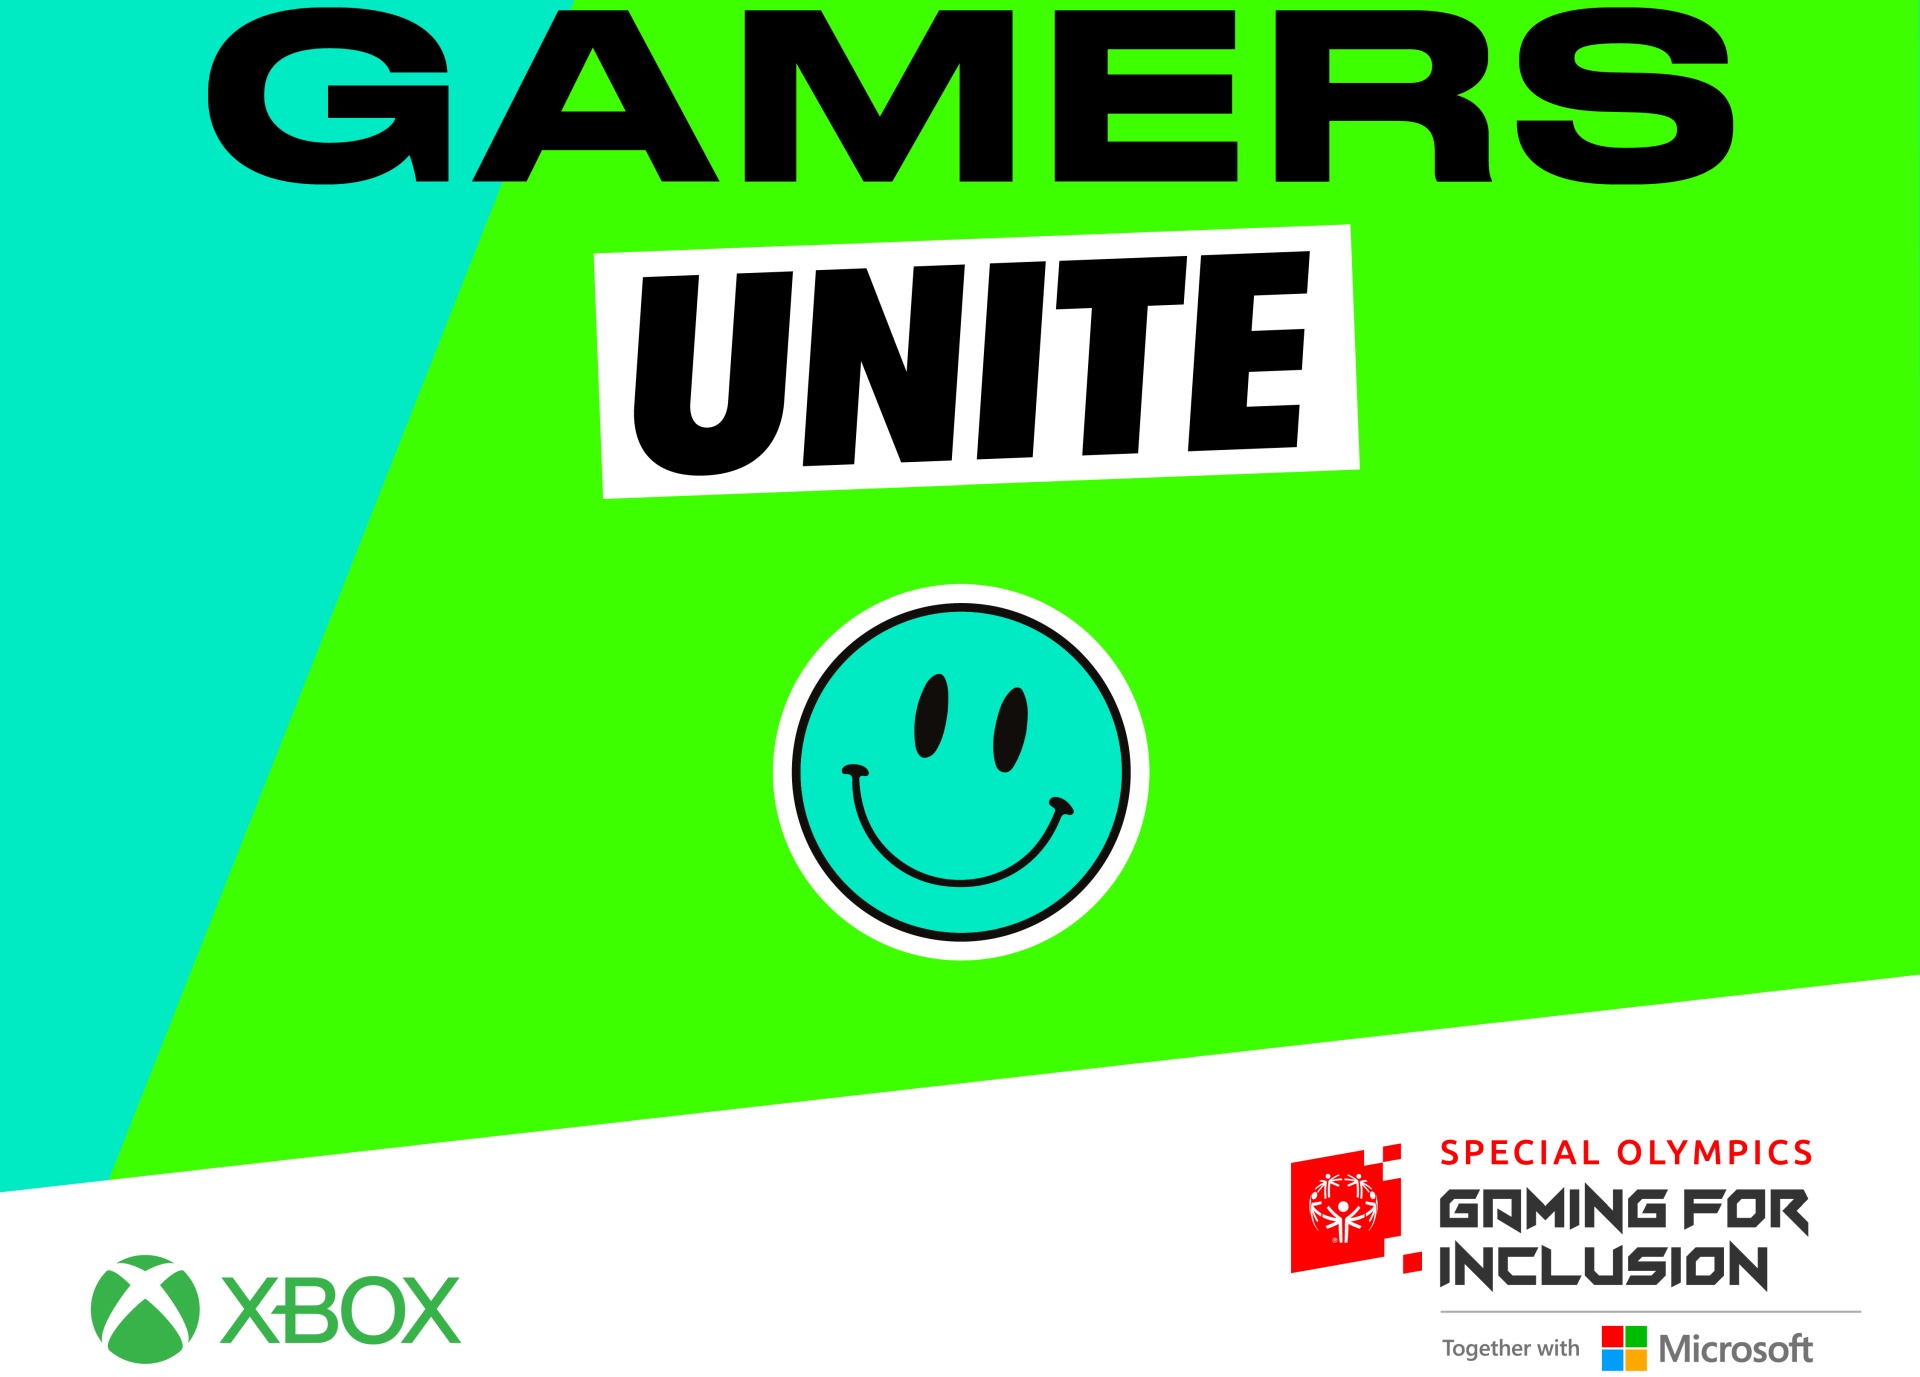 Xbox und Special Olympics veranstalten eSport-Turnier Gaming for Inclusion